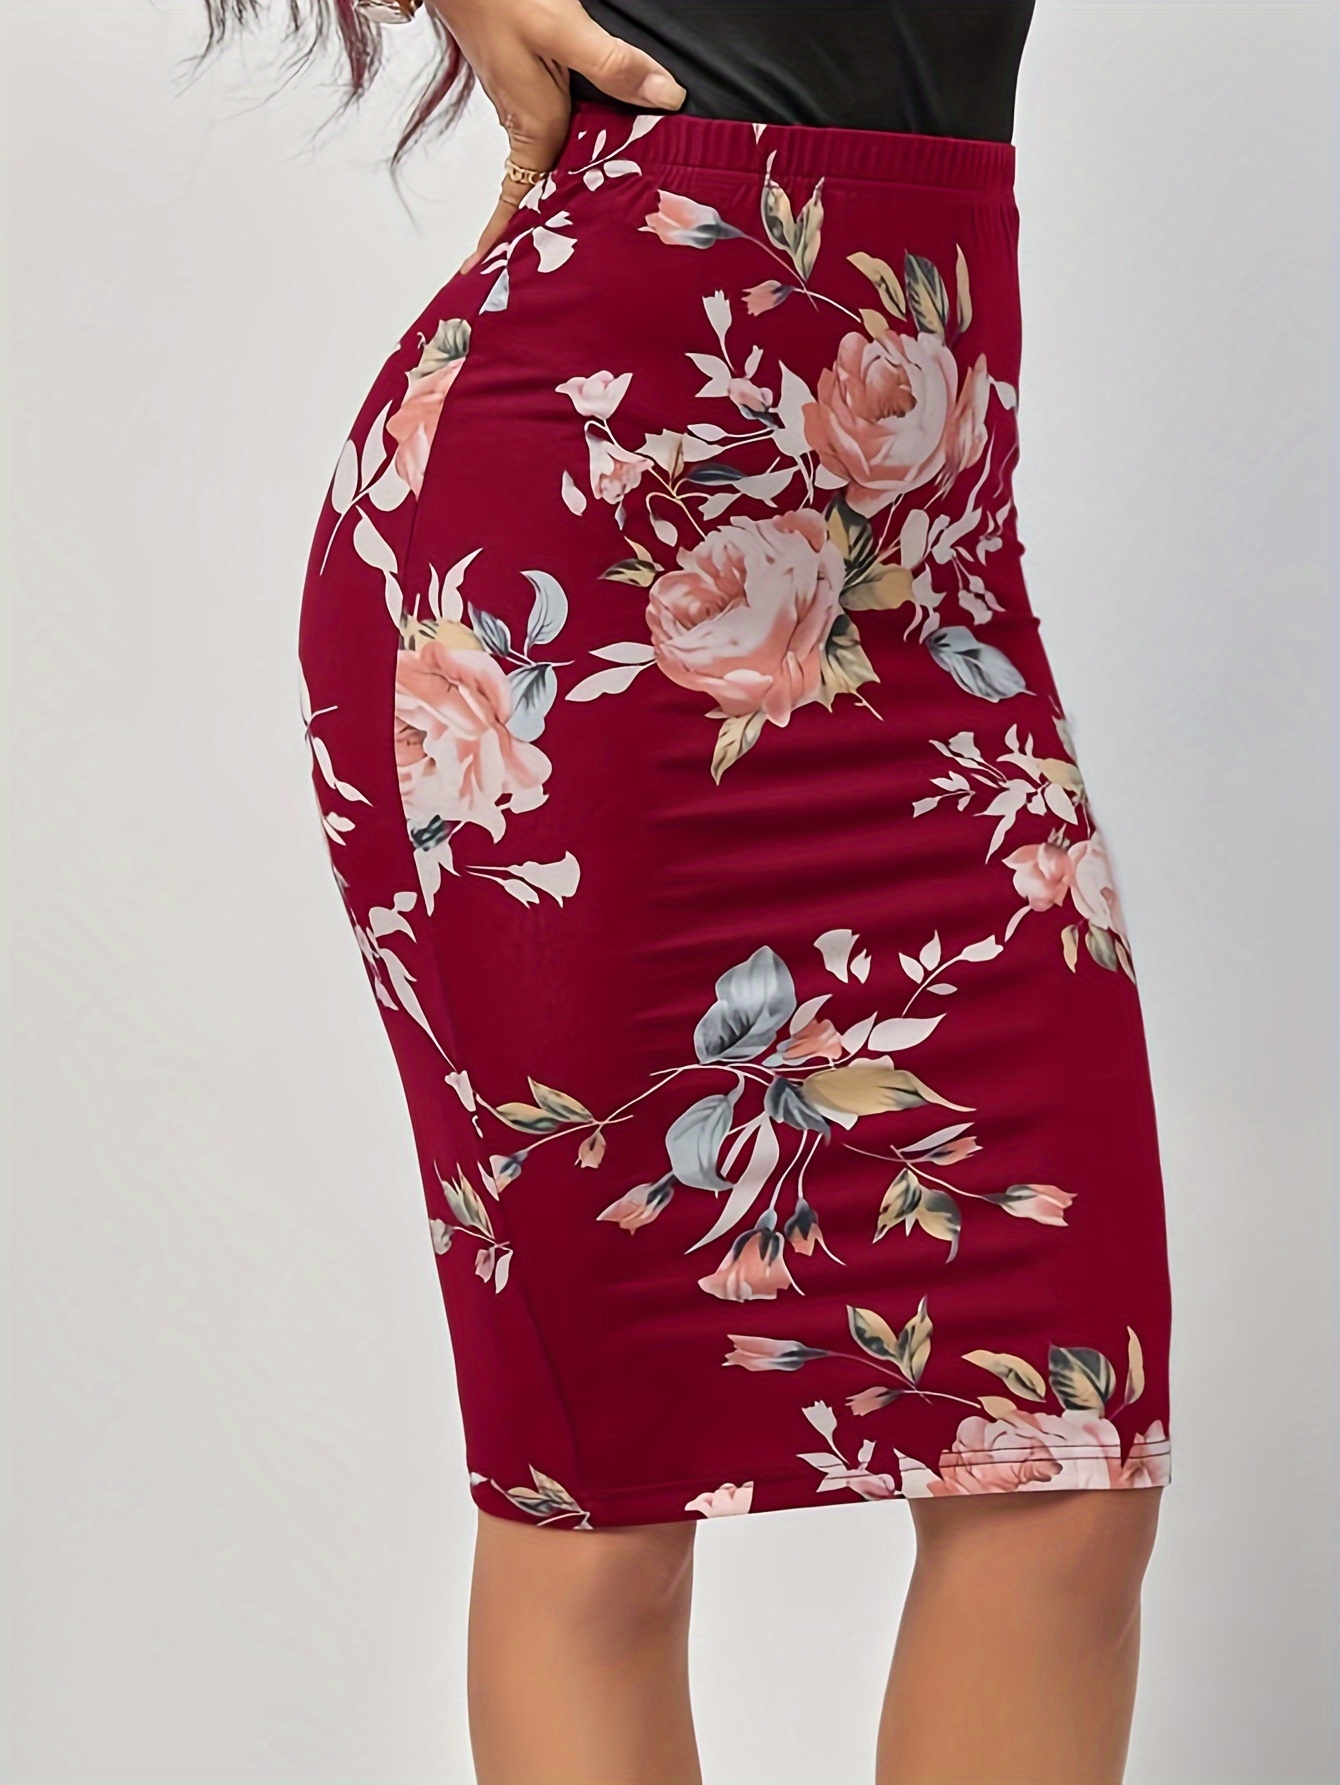 floral print pencil skirt elegant high waist midi skirt for spring summer womens clothing